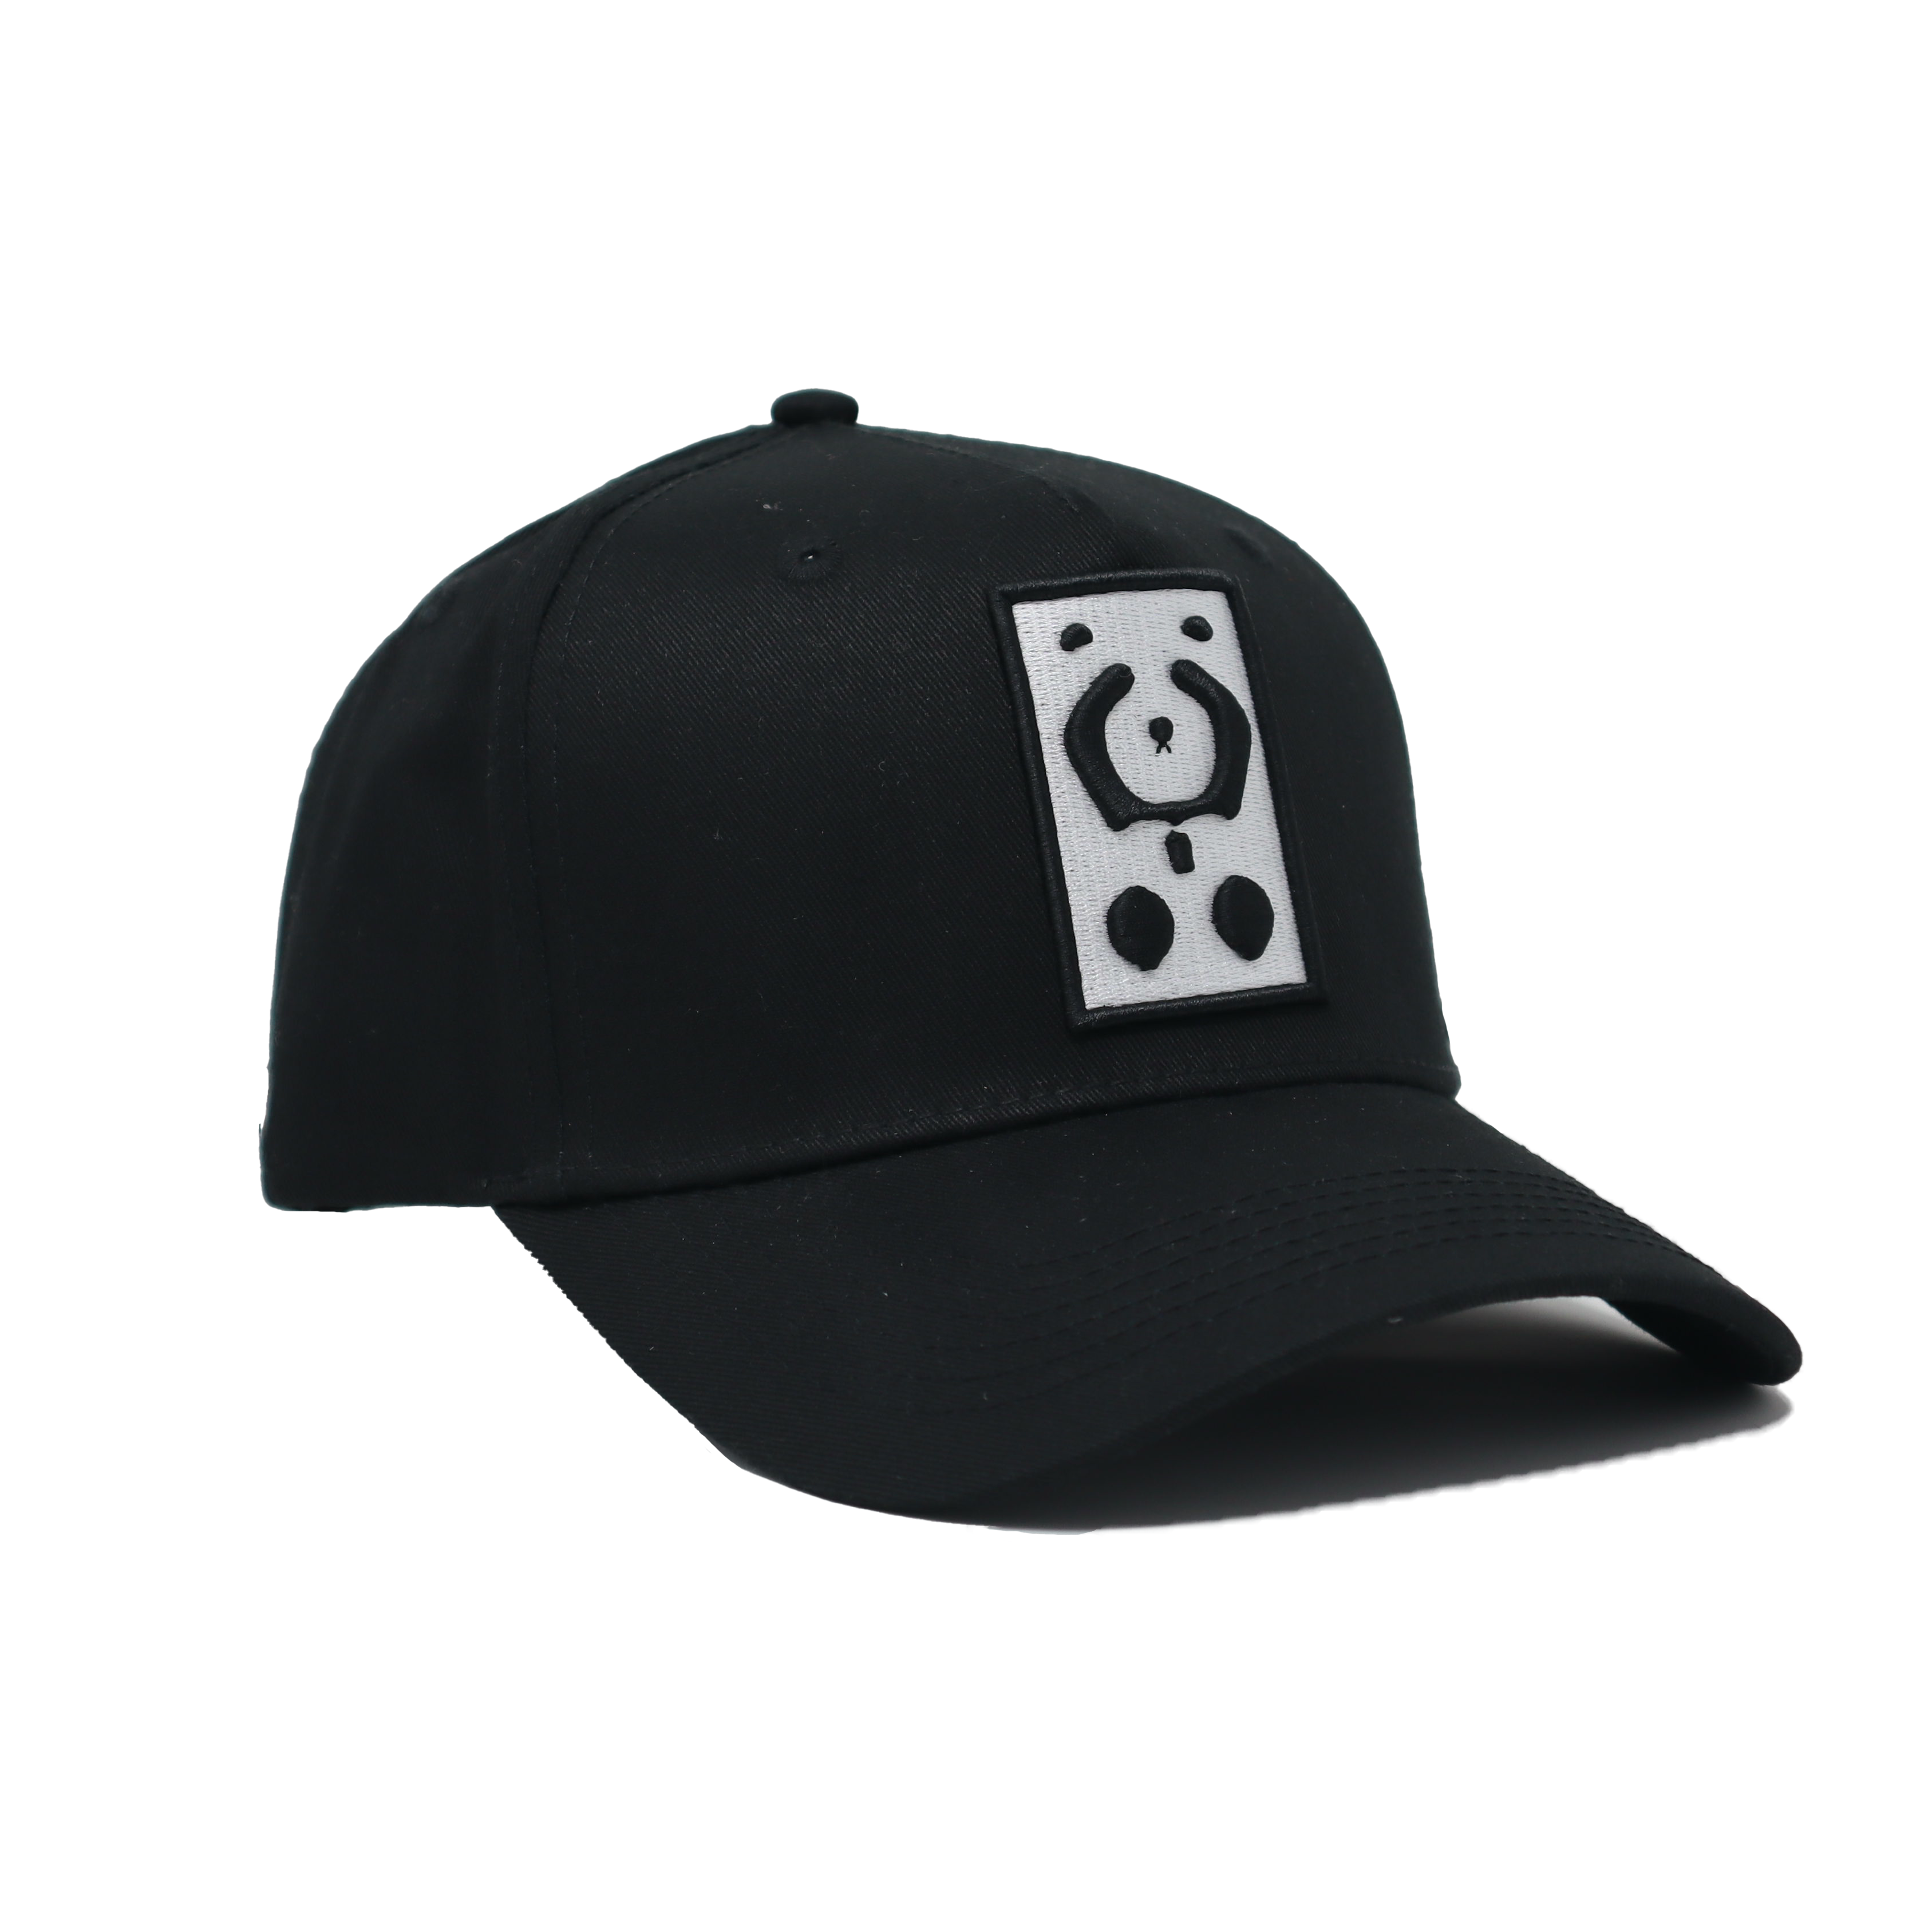 Iconic Panda Baseball Cap